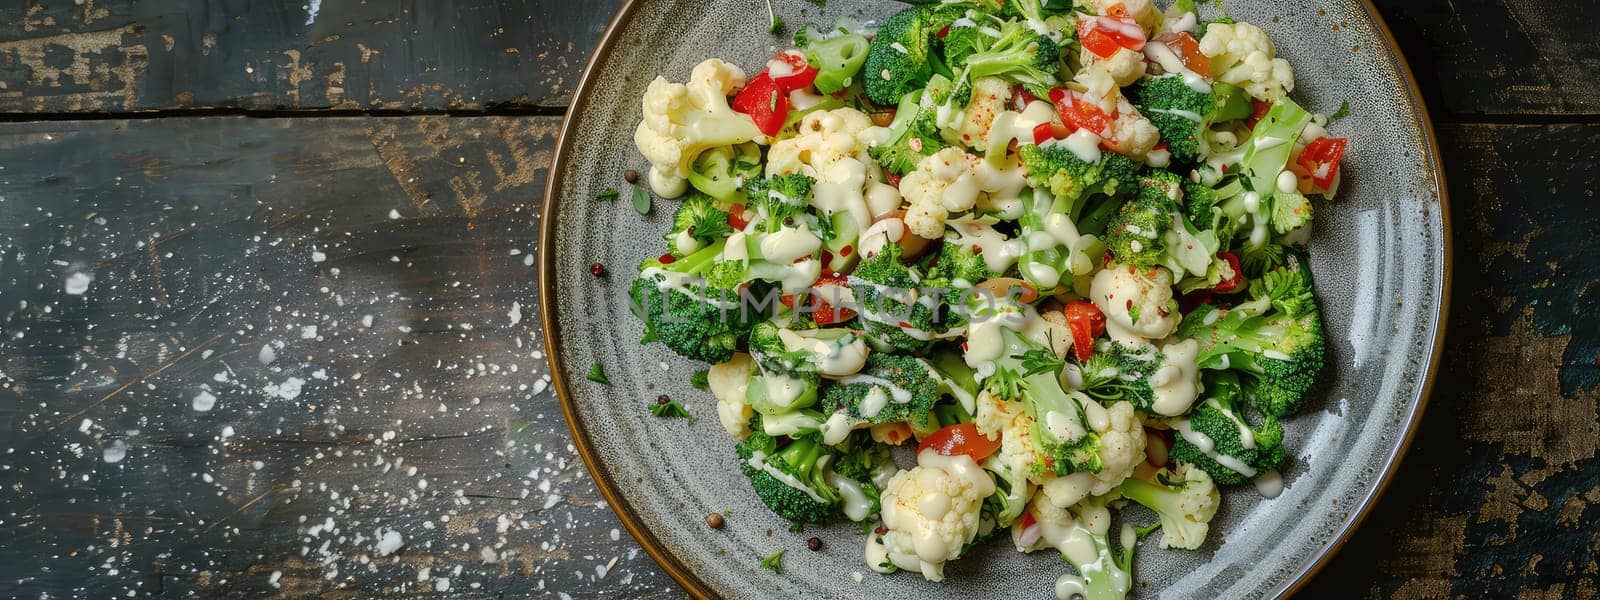 Cauliflower and broccoli salad. Selective focus. food.